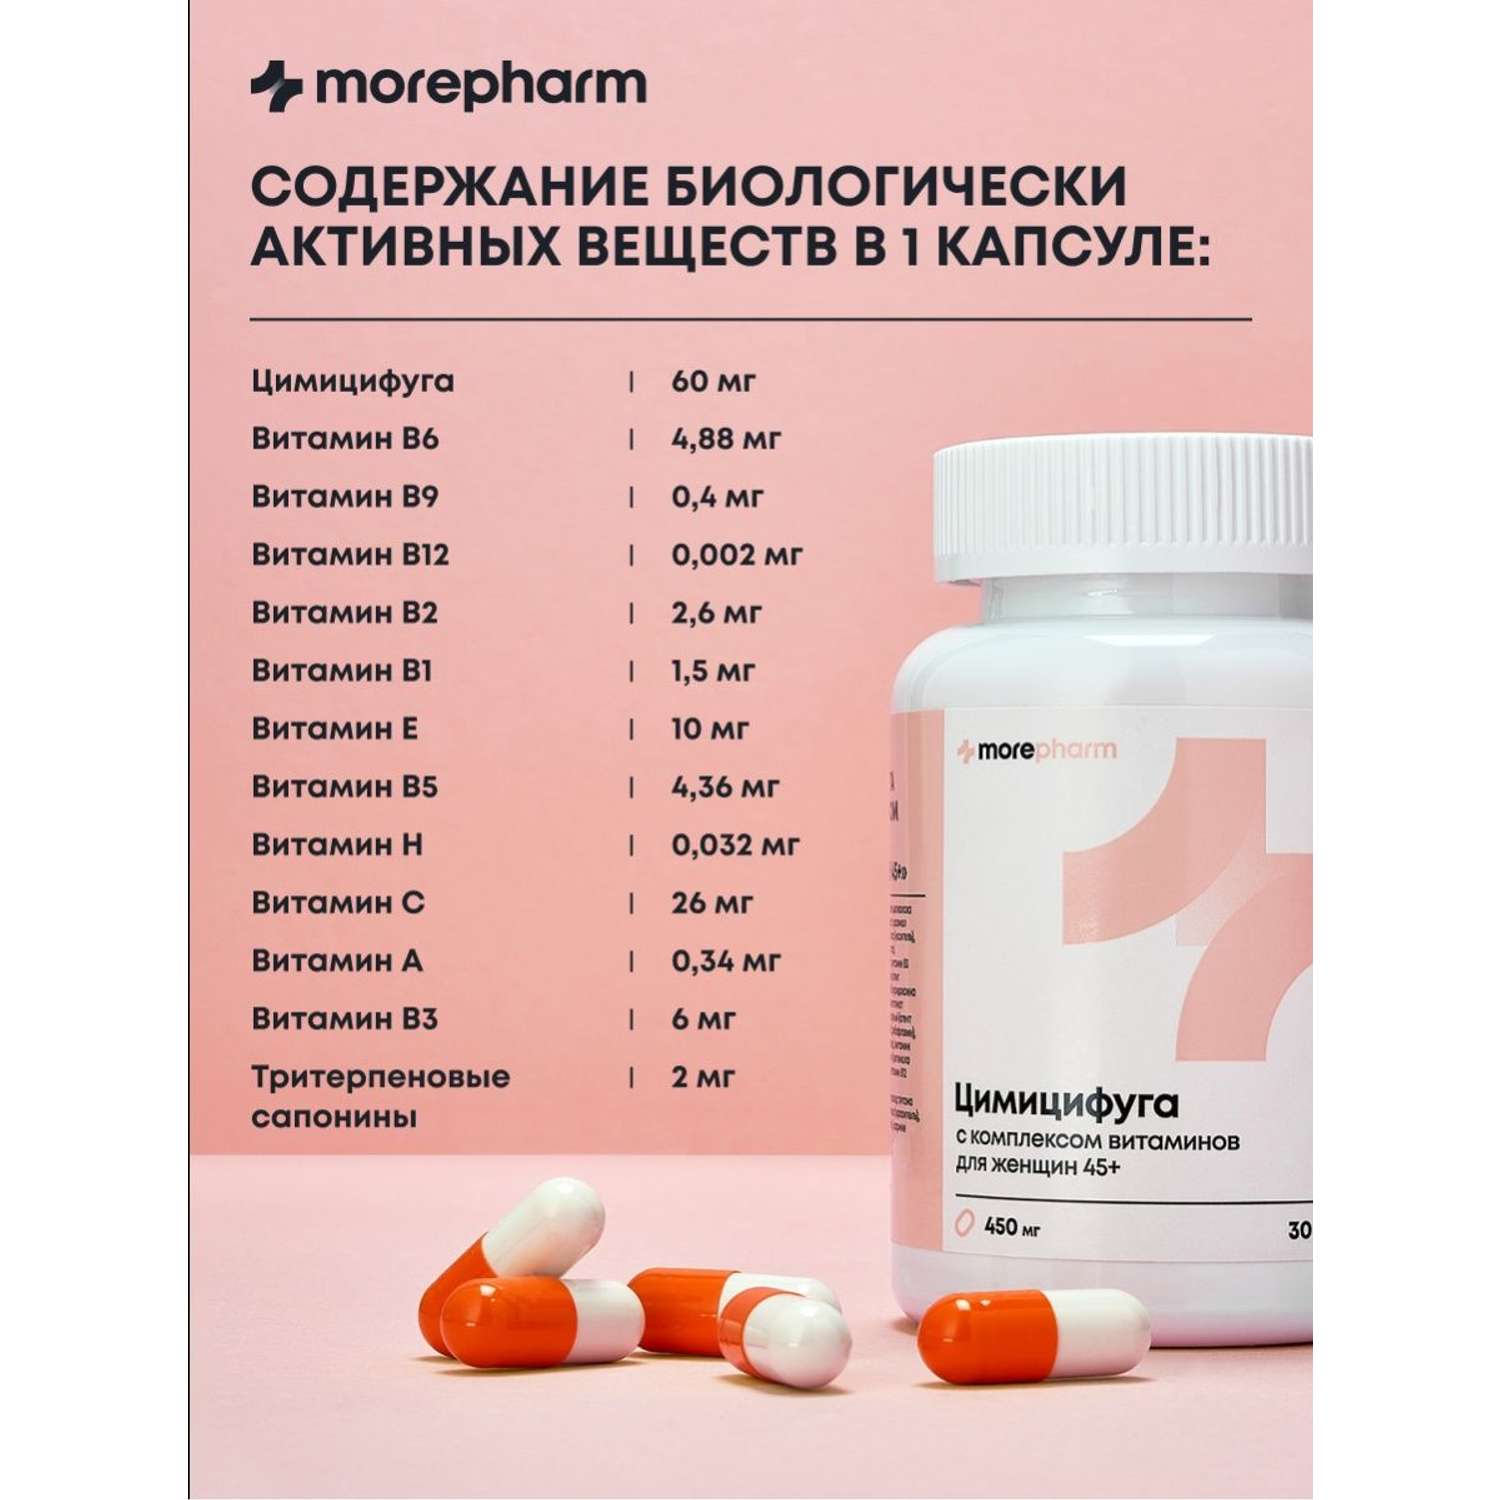 БАД morepharm Цимицифуга фитоэстроген при климаксе и менопаузе - фото 5